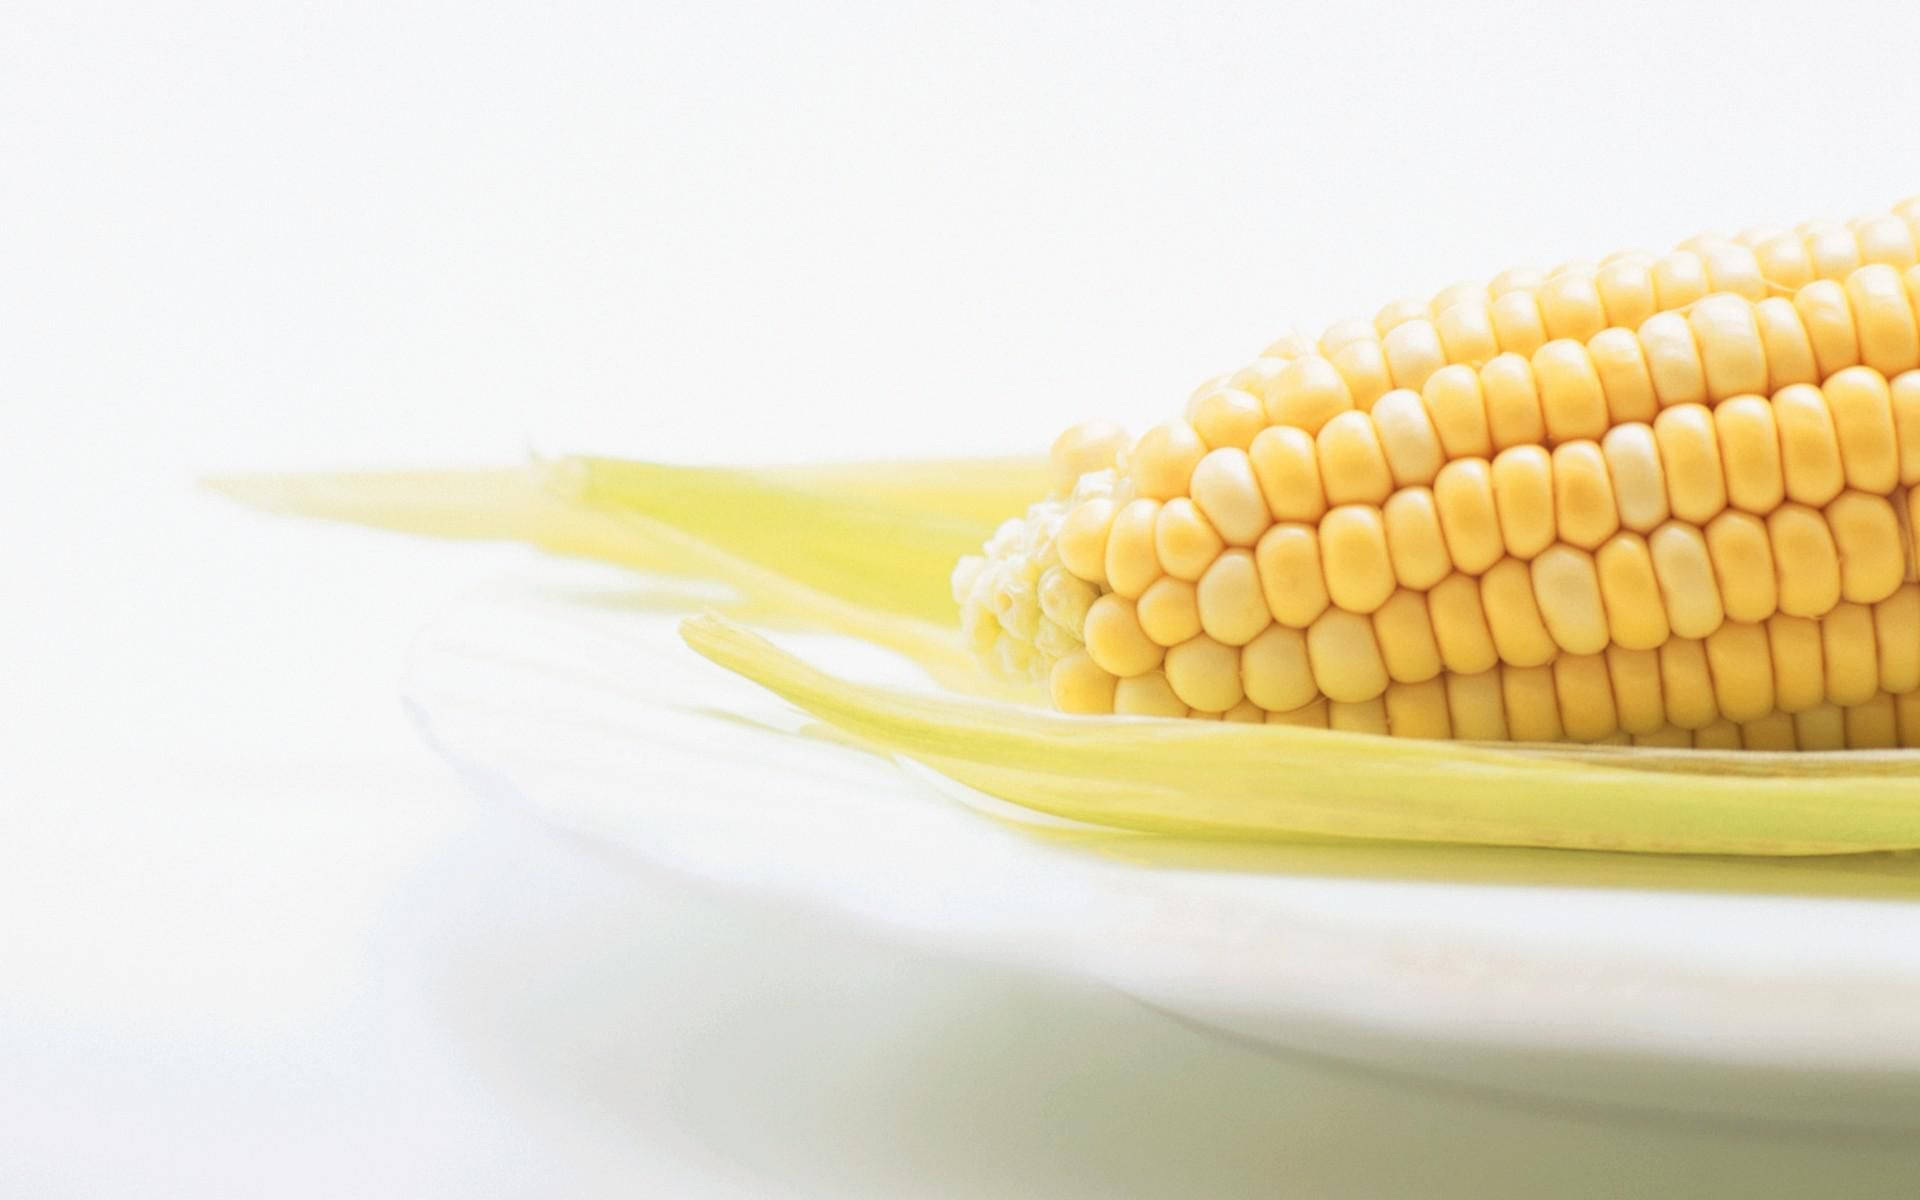 Corn note. Кукуруза. Кукуруза фон. Вареная кукуруза. Кукуруза (зерно).